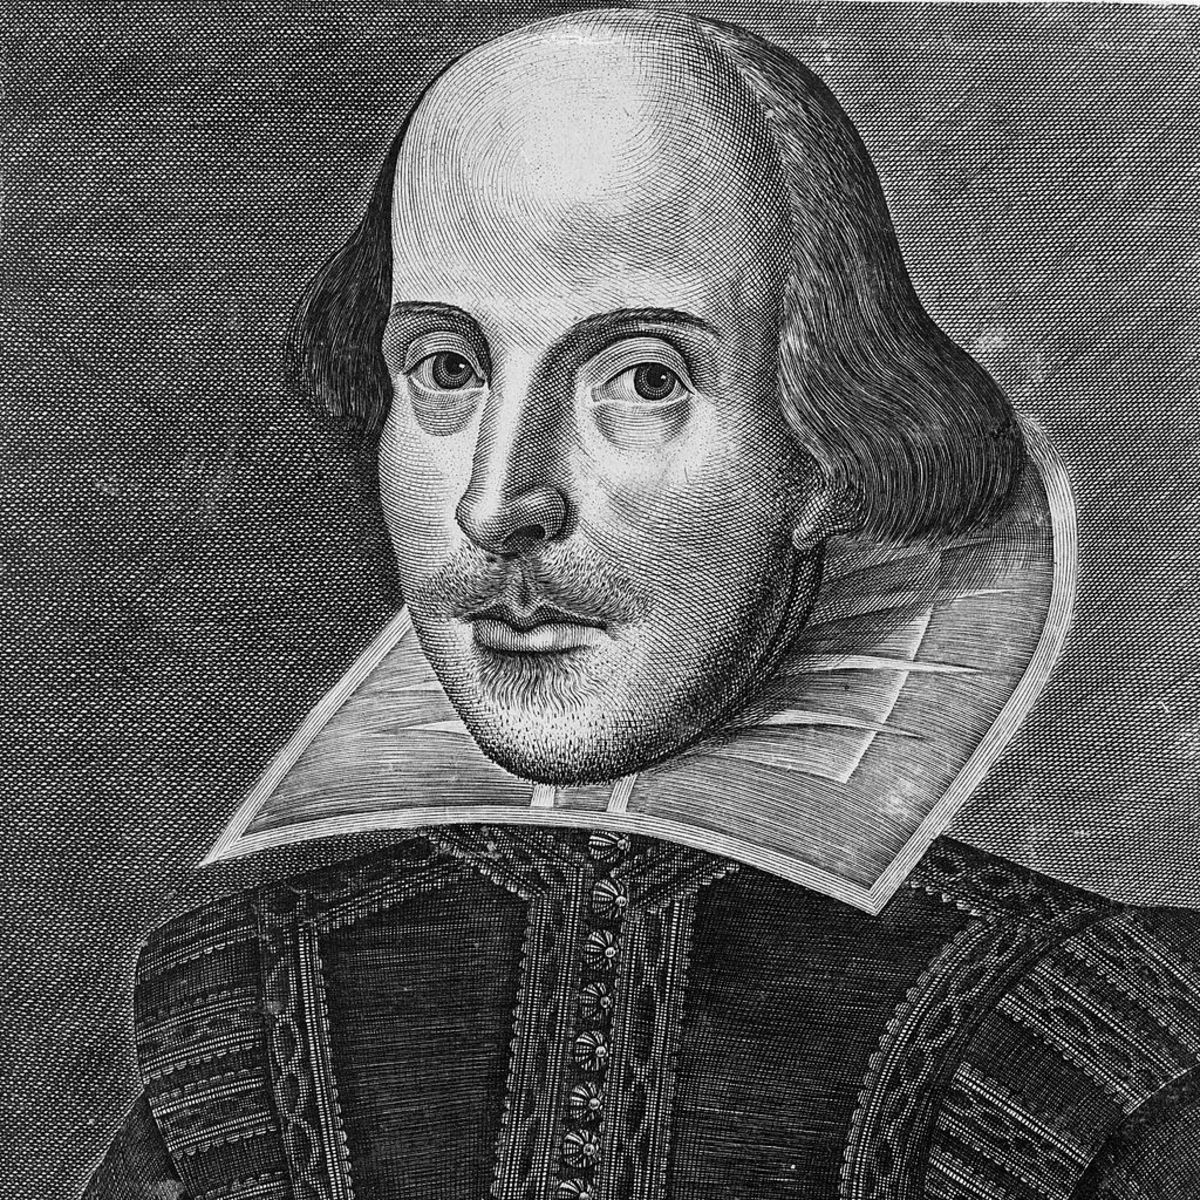 William Shakespeare (the Martin Droeshout portrait)